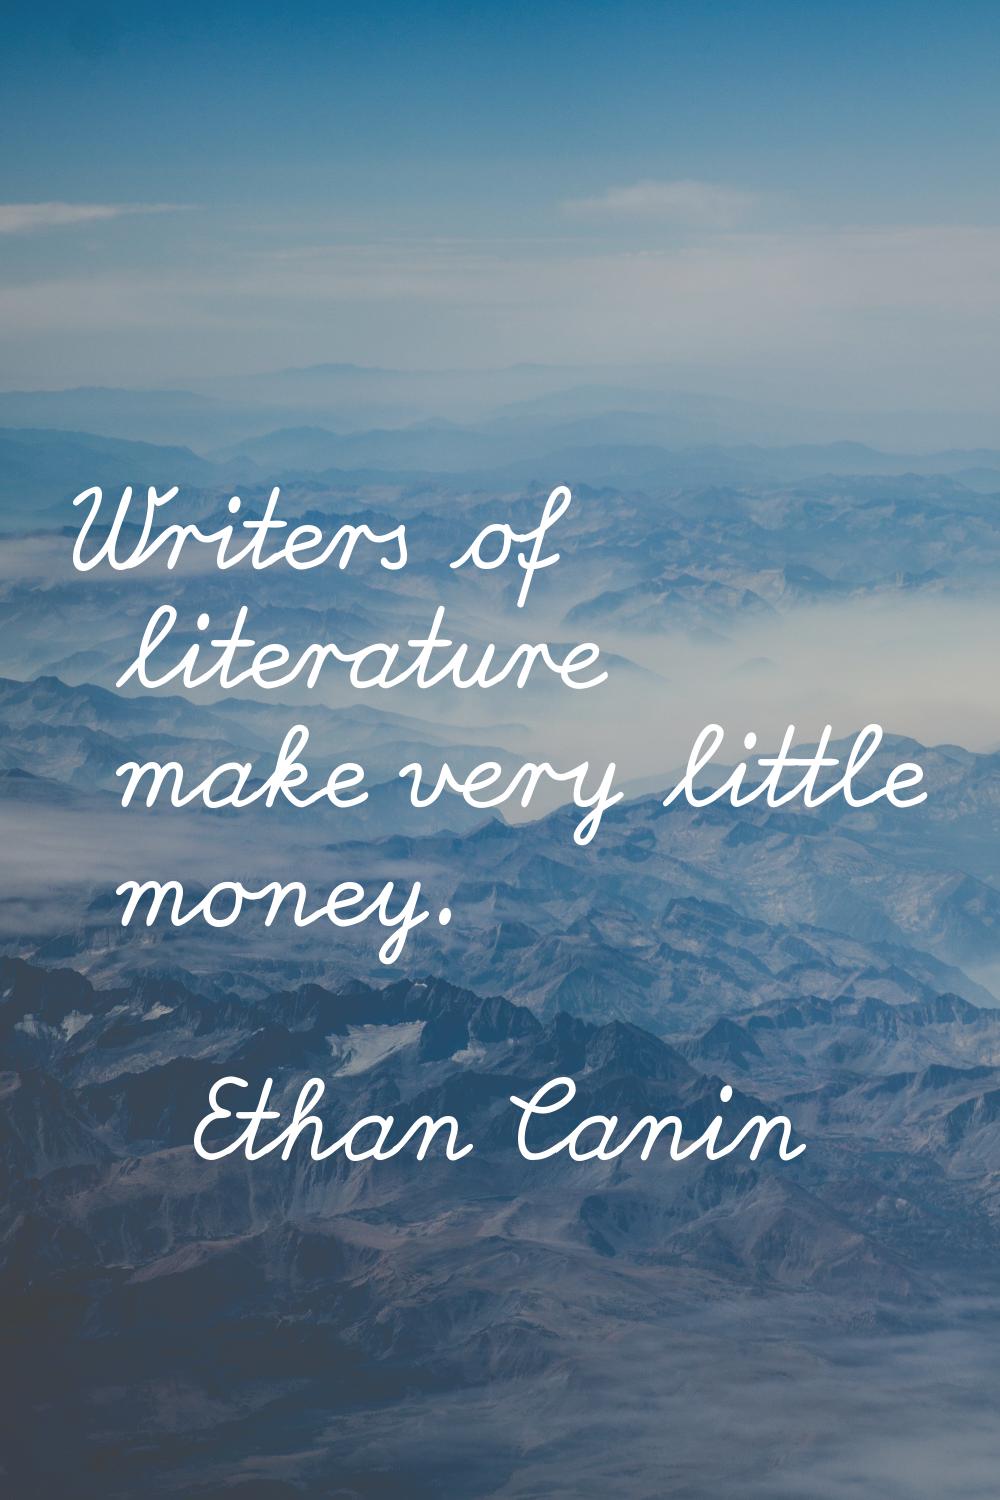 Writers of literature make very little money.